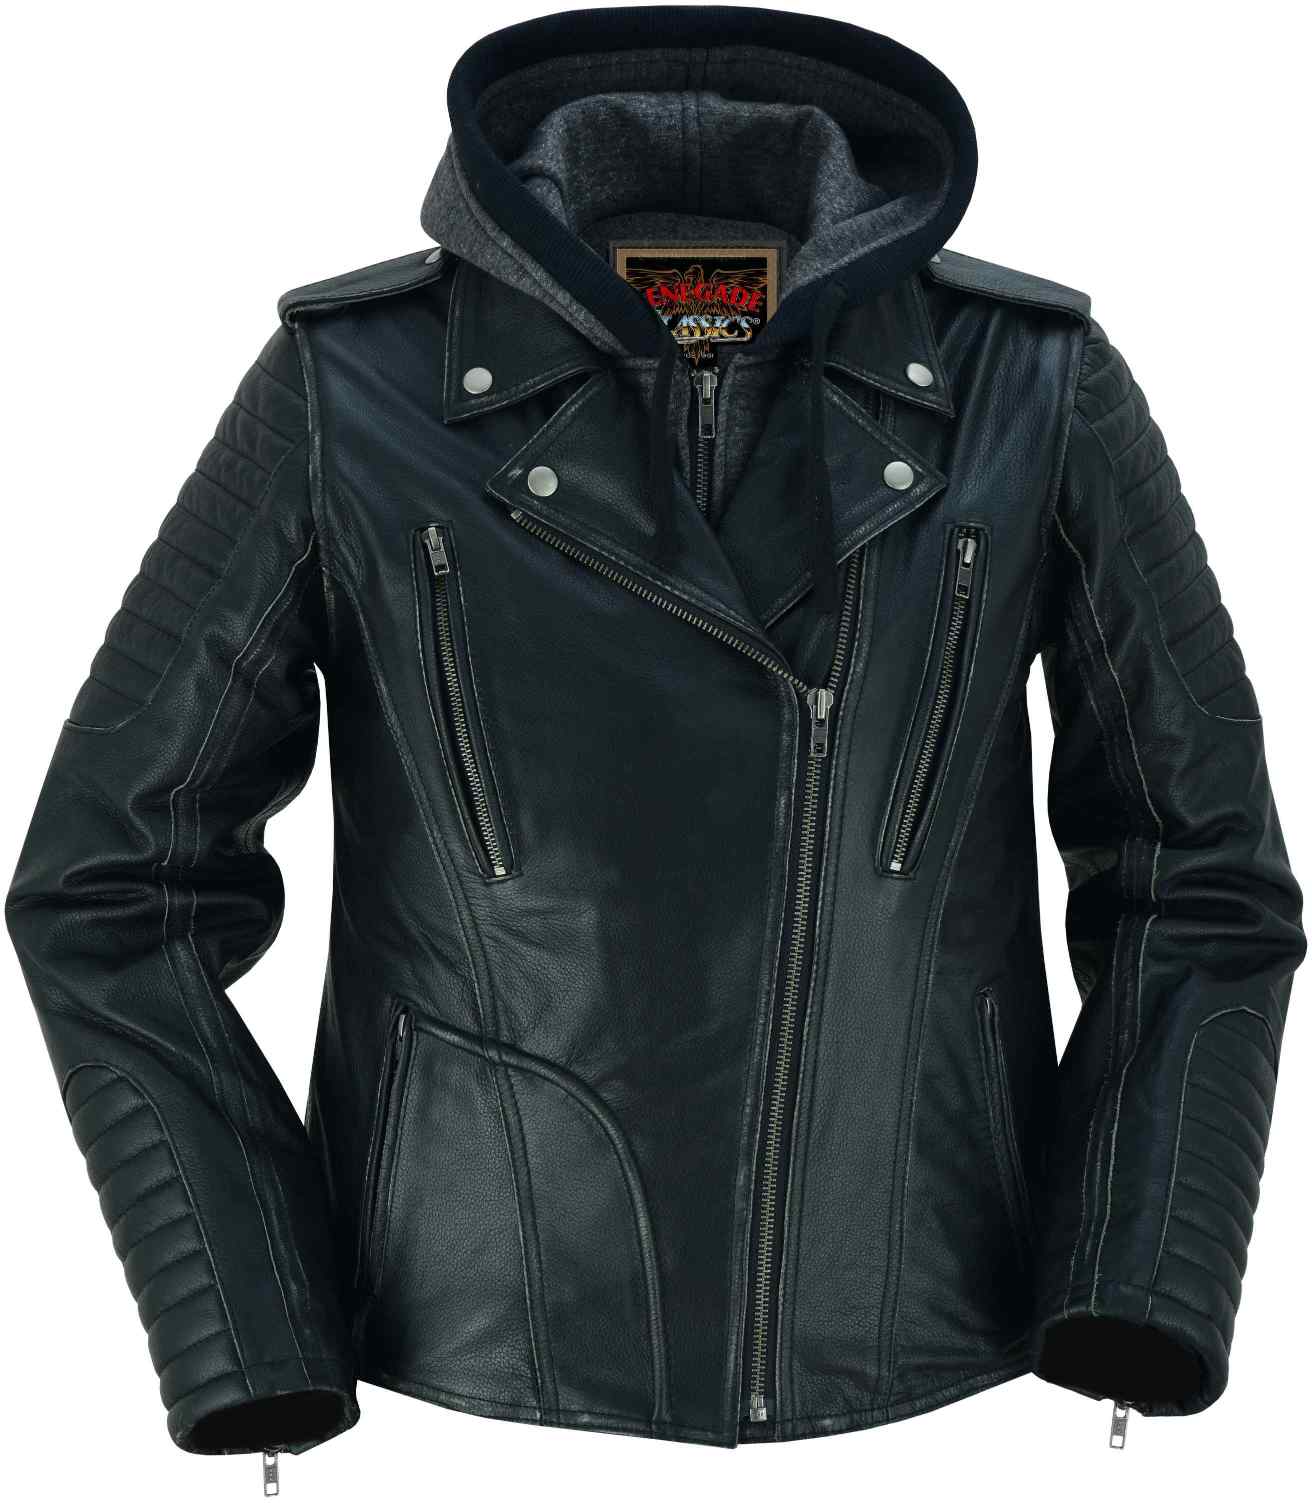 Lorna Jane Women's Black Alice Moto Biker Faux Leather Athletic Jacket Small  - $49 - From Savannah